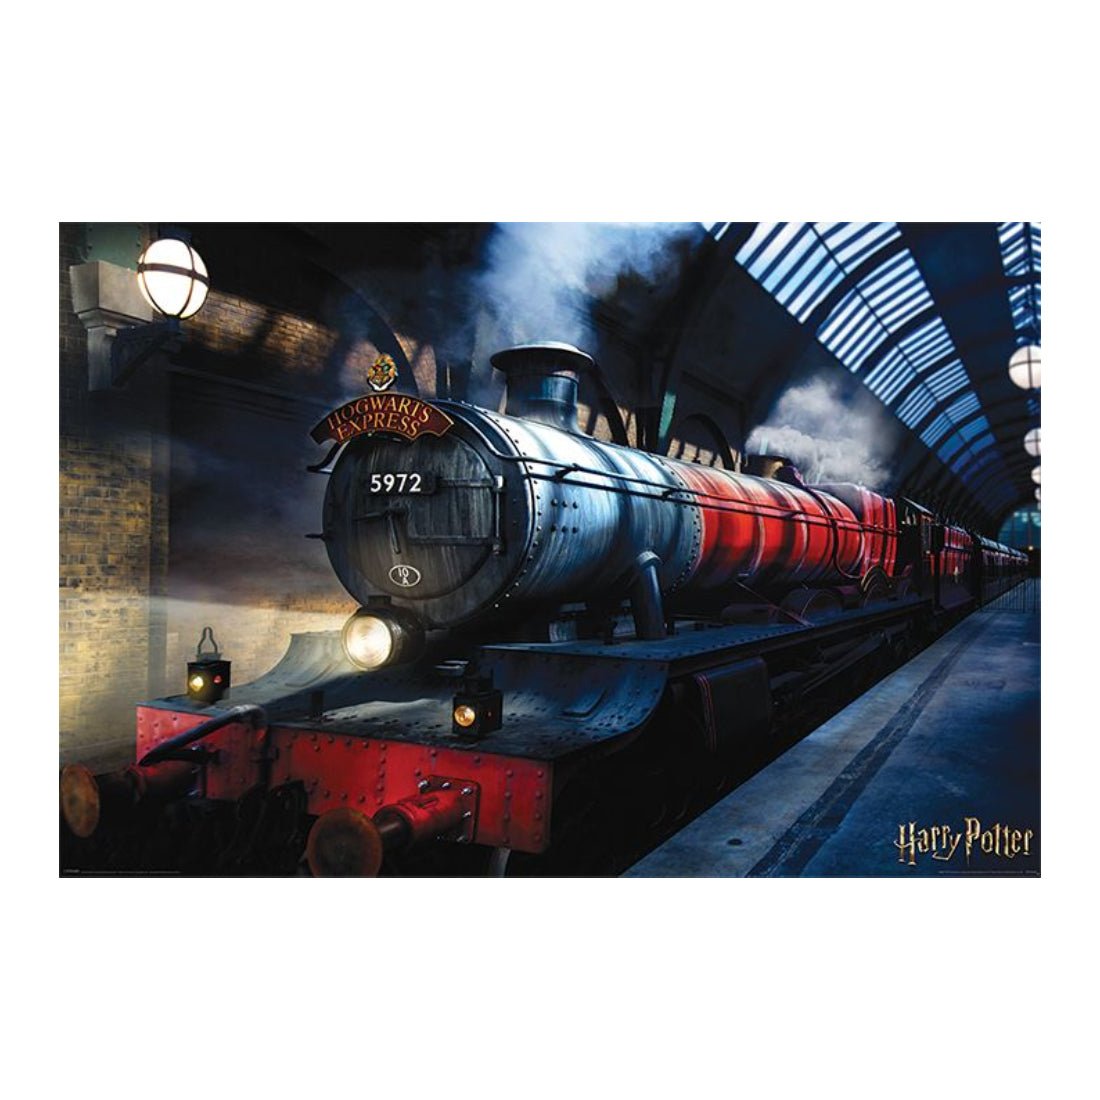 Harry Potter - Hogwarts Express Maxi Posters - أكسسوار - Store 974 | ستور ٩٧٤